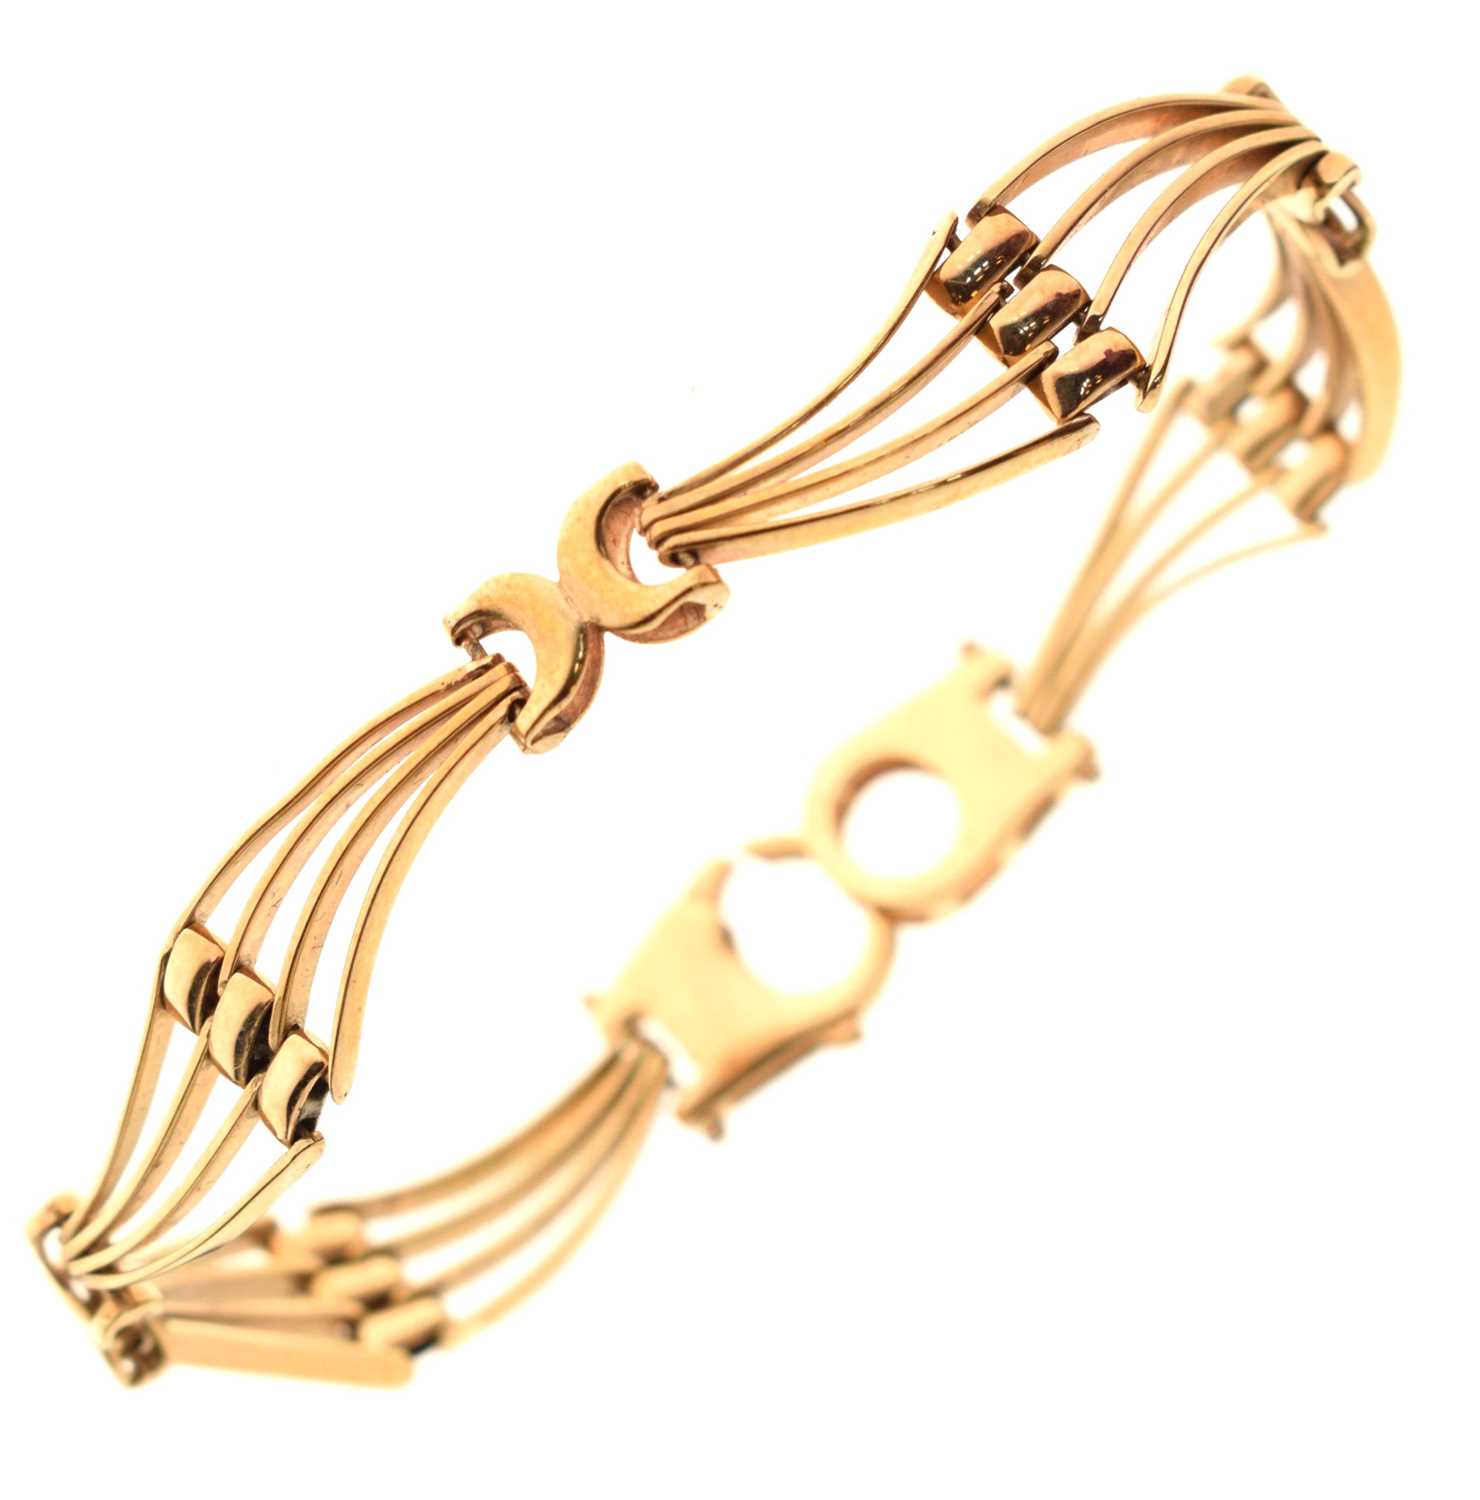 9ct gold fancy gate link bracelet